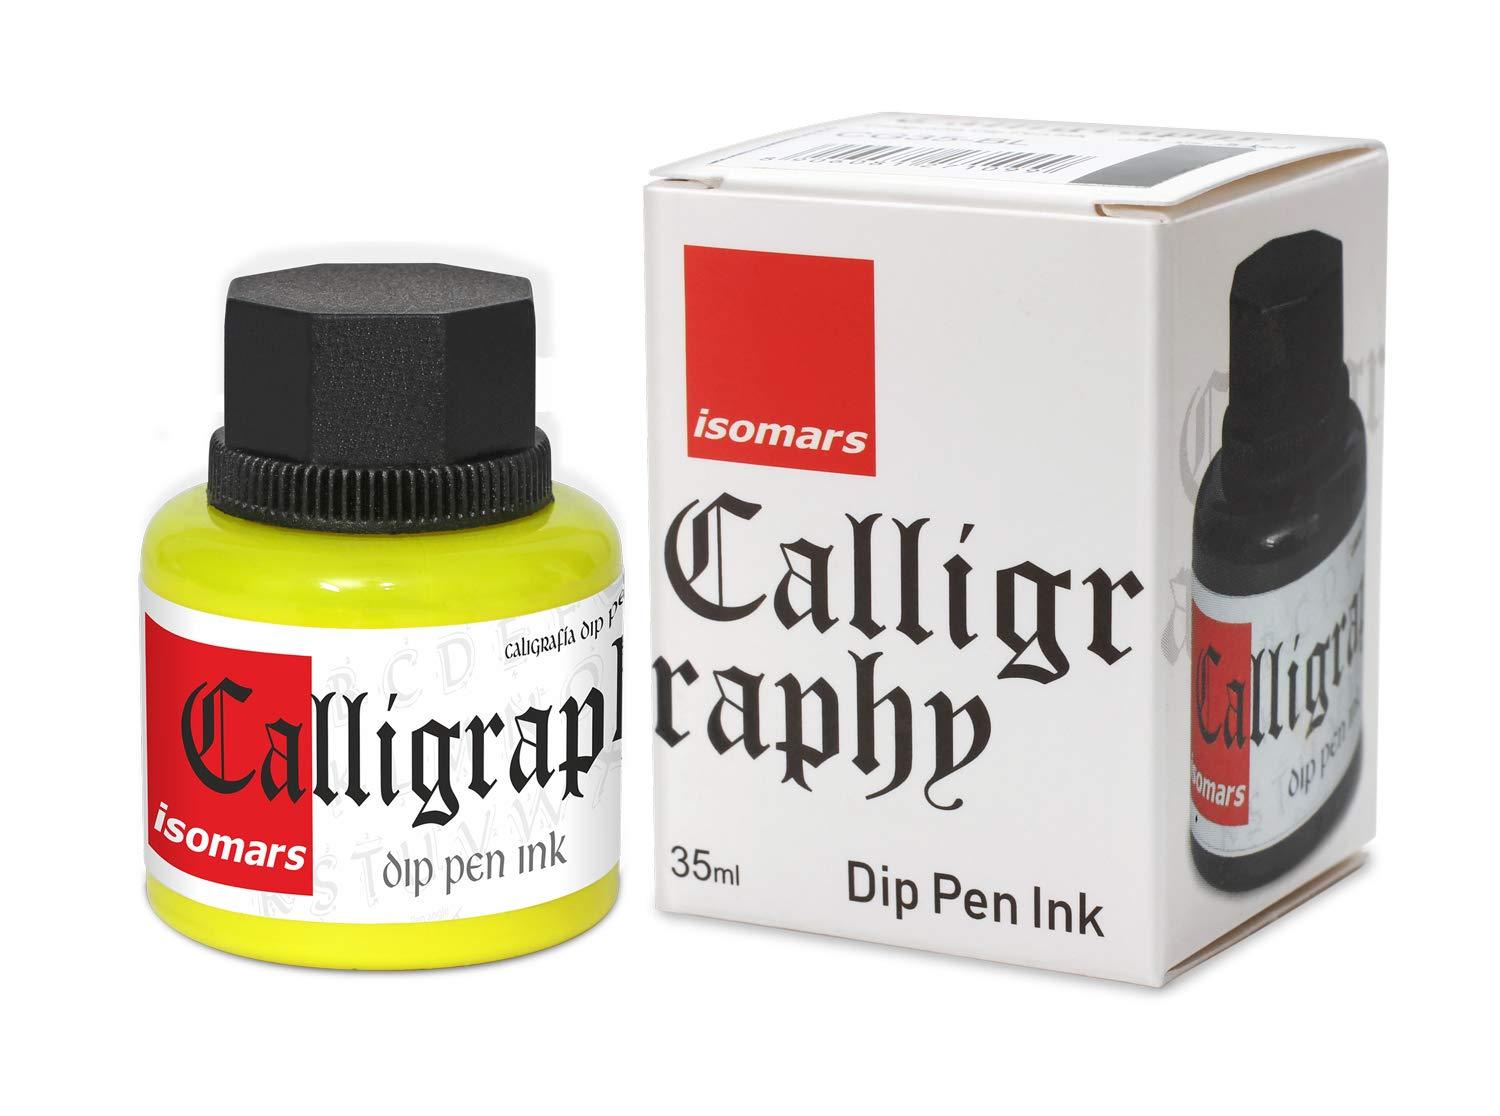 Isomars Calligraphy Dip Pen Ink 35ml - Lemon Yellow